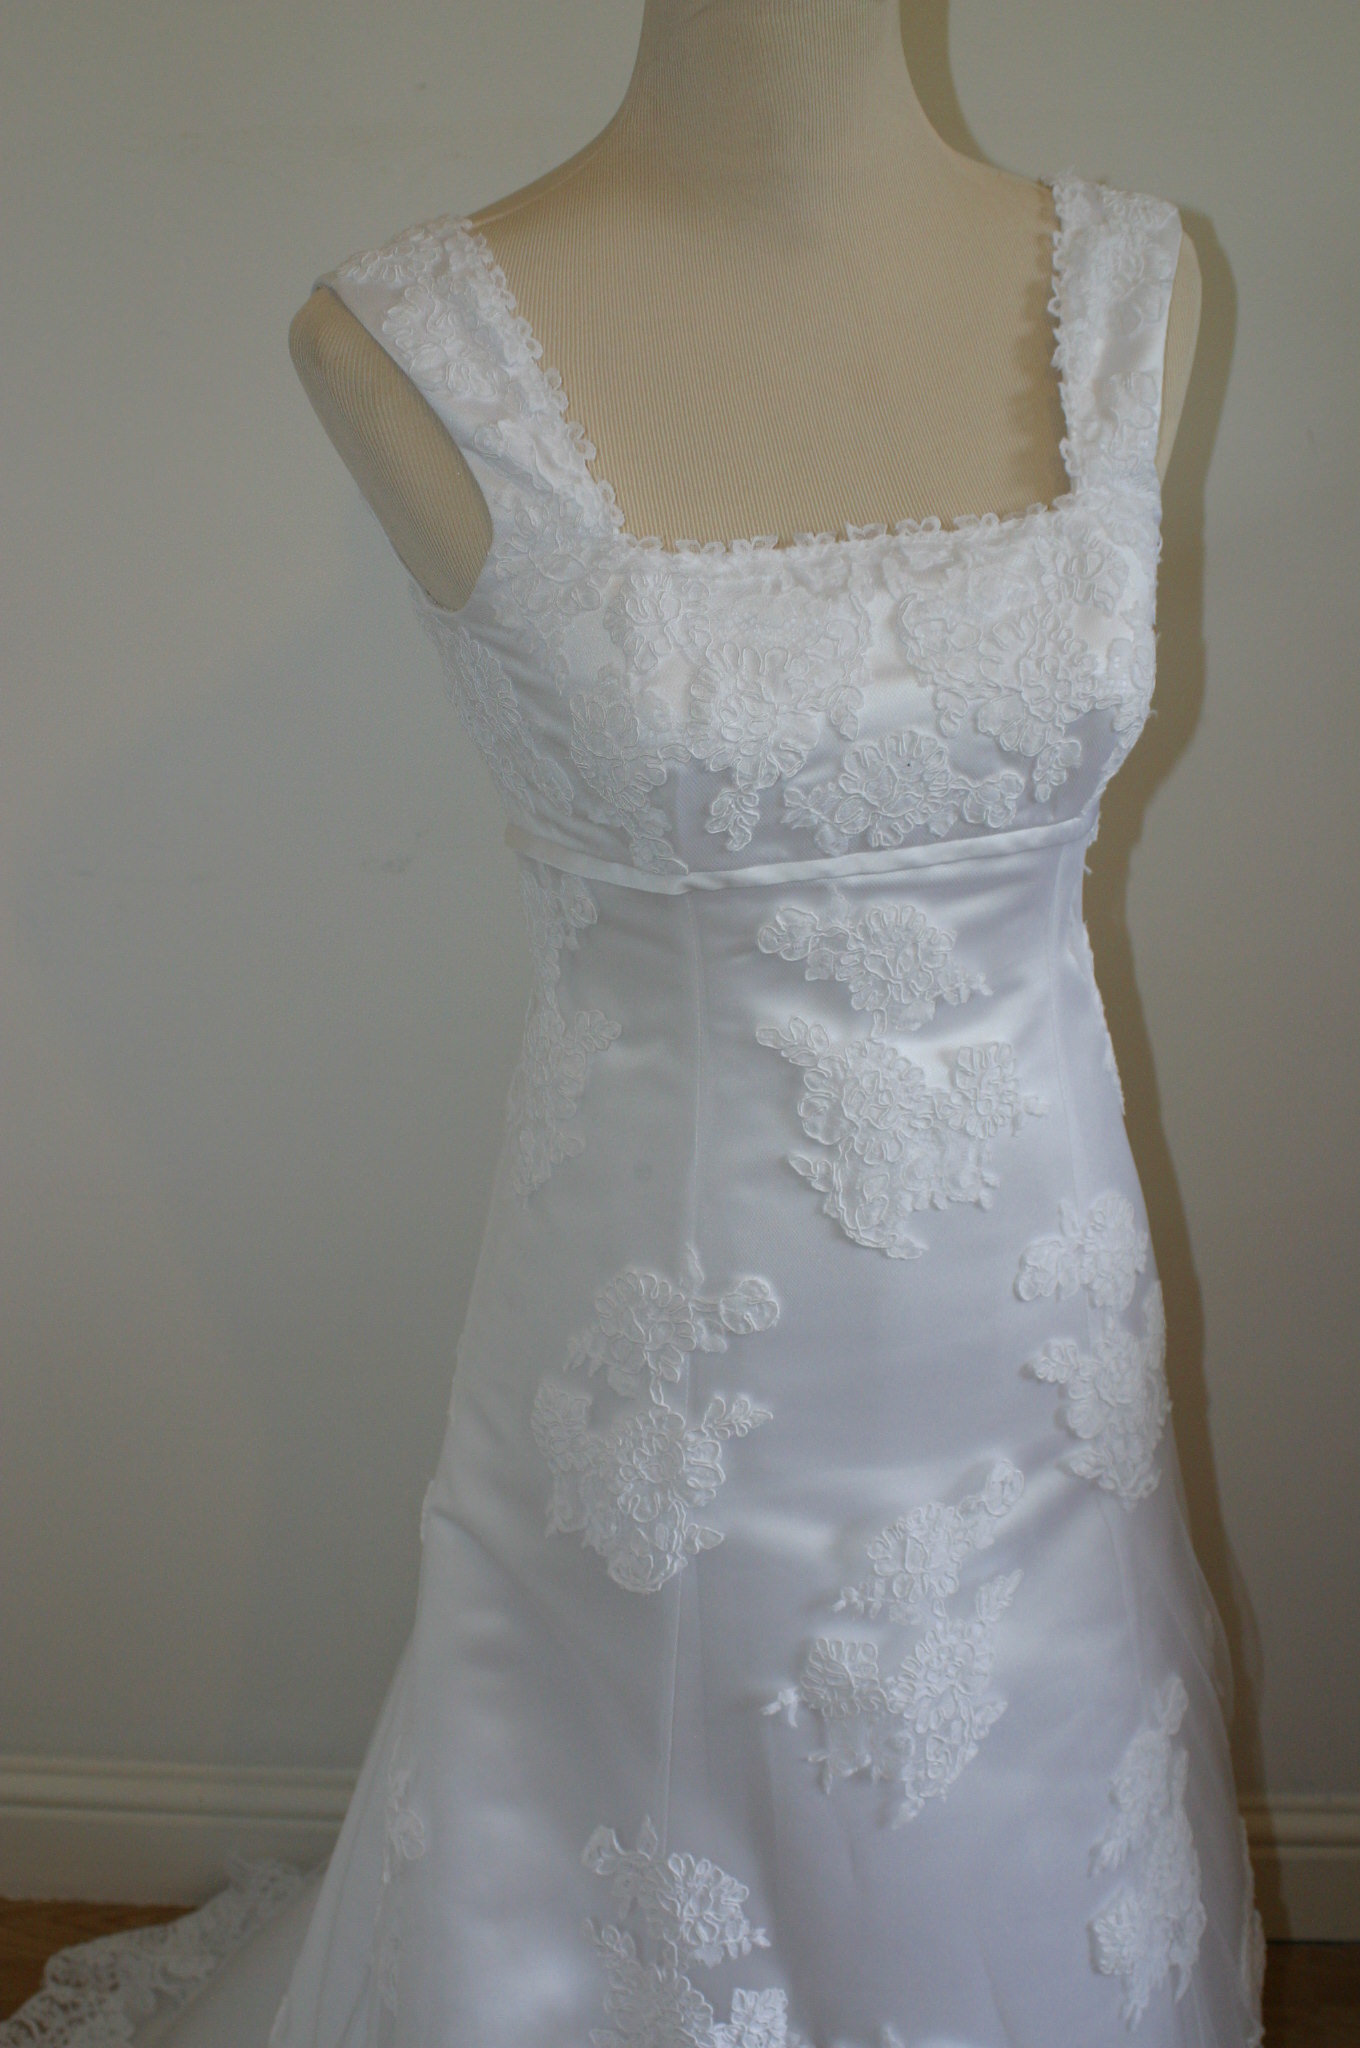 Hand appliqued lace wedding dress